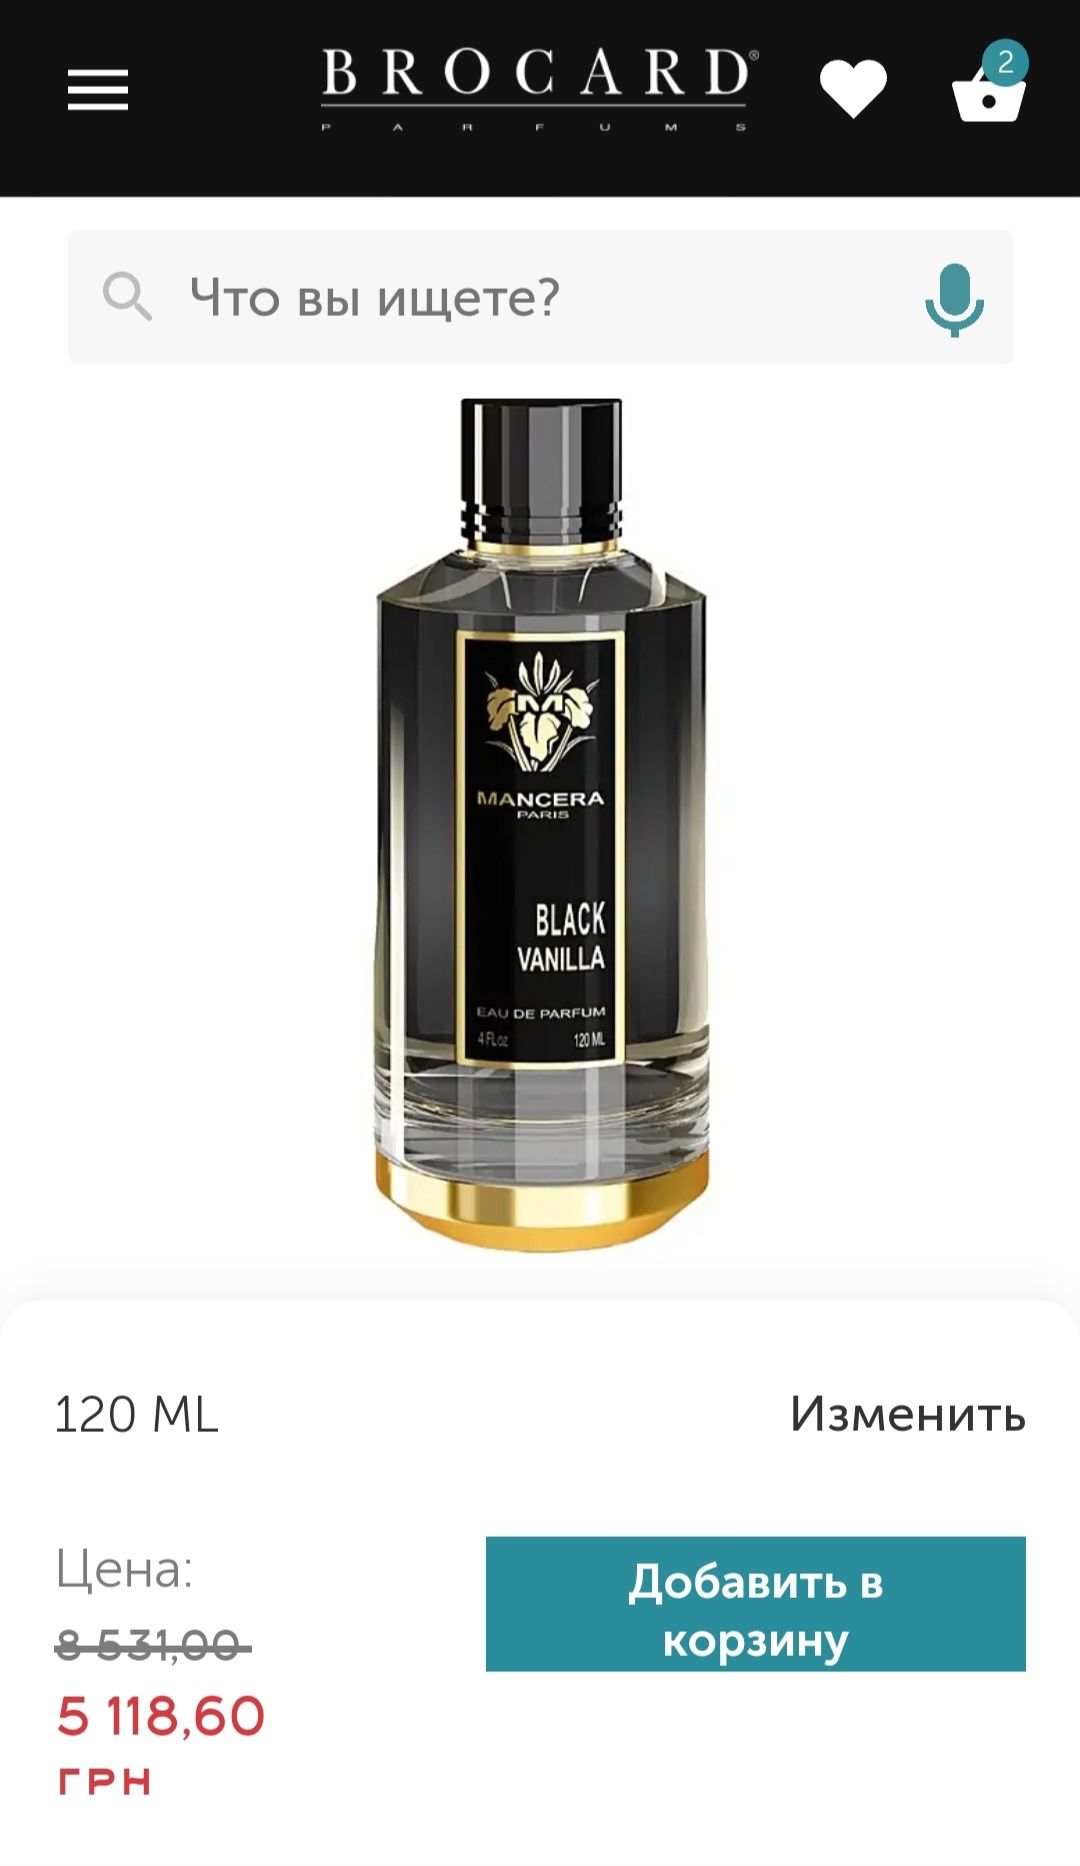 Mansera Black Vanilla